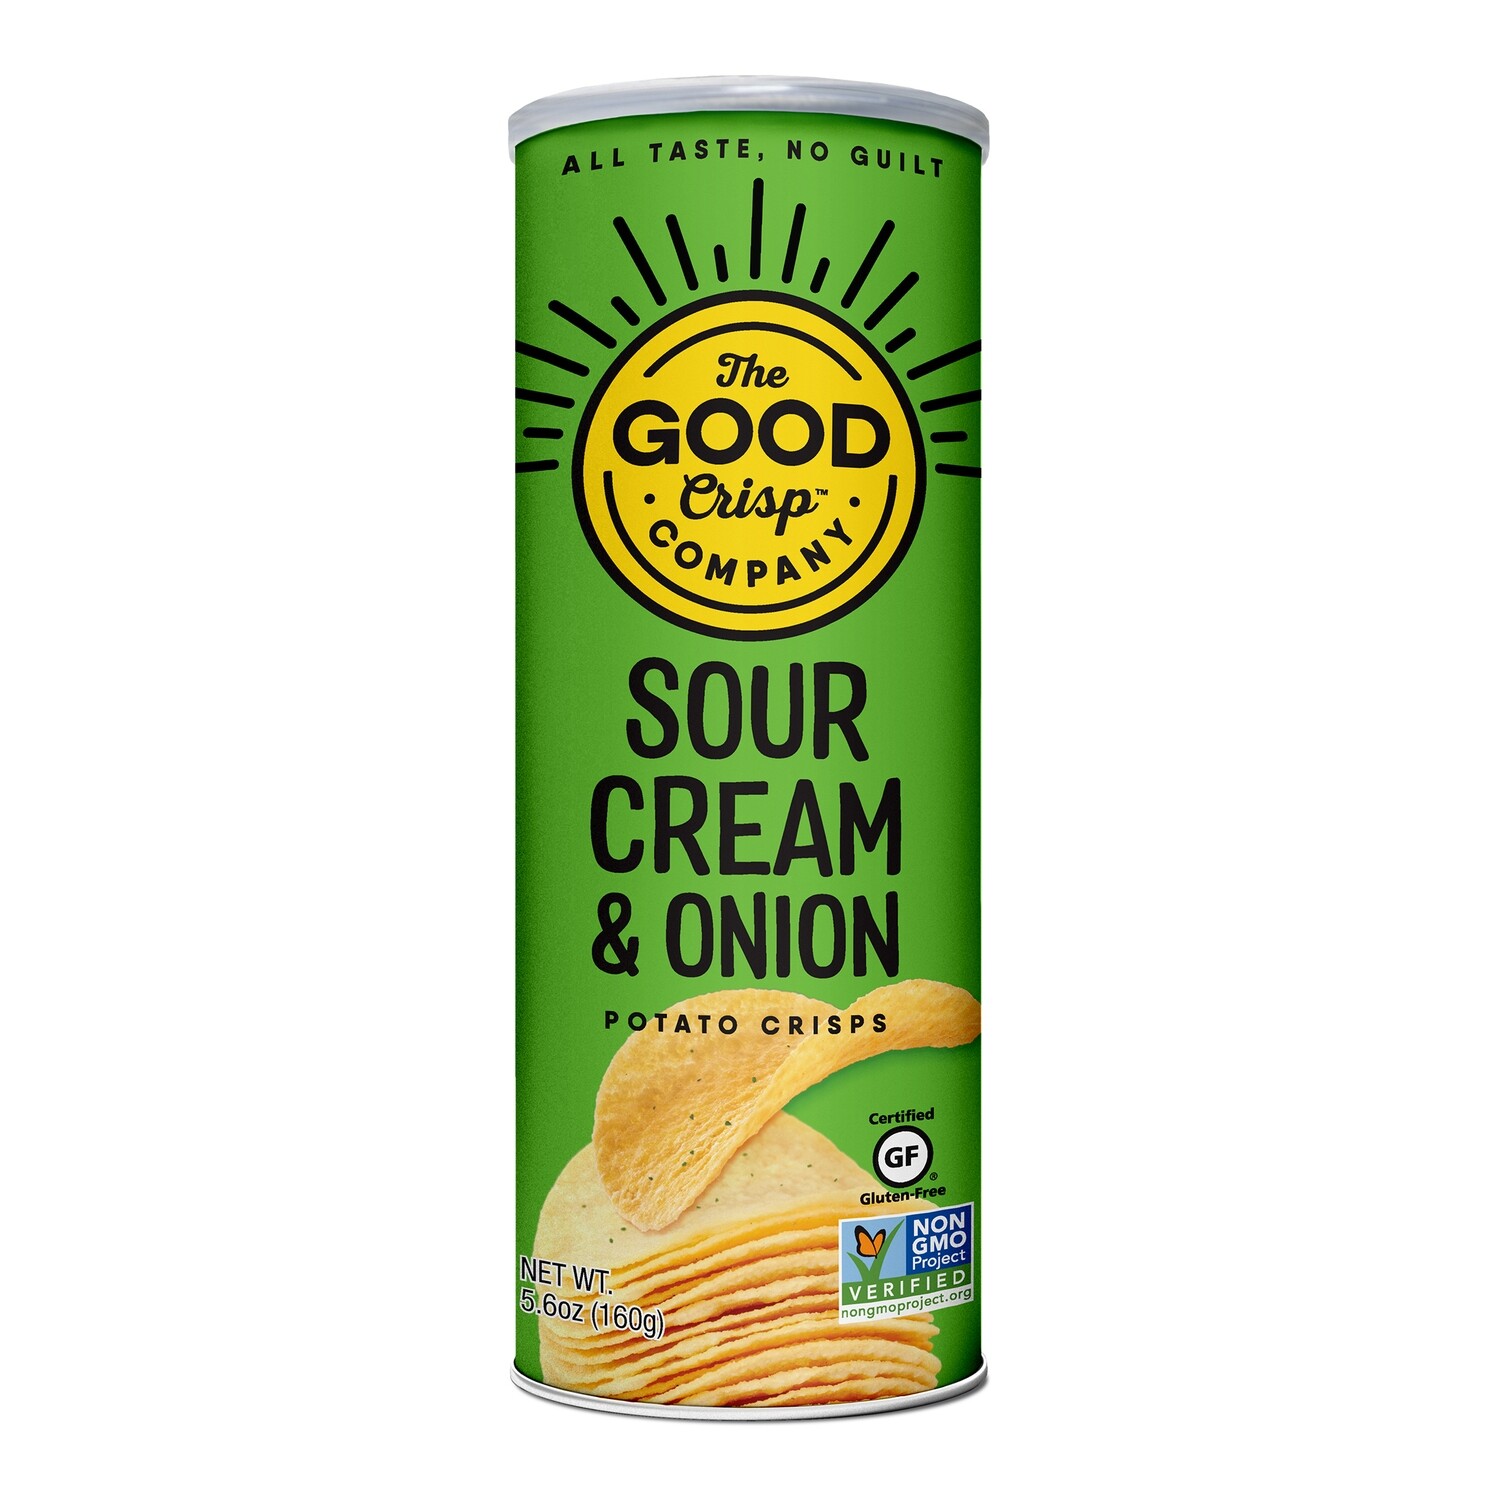 The Good Crisp Company Sour Cream and Onion Potato Crisps